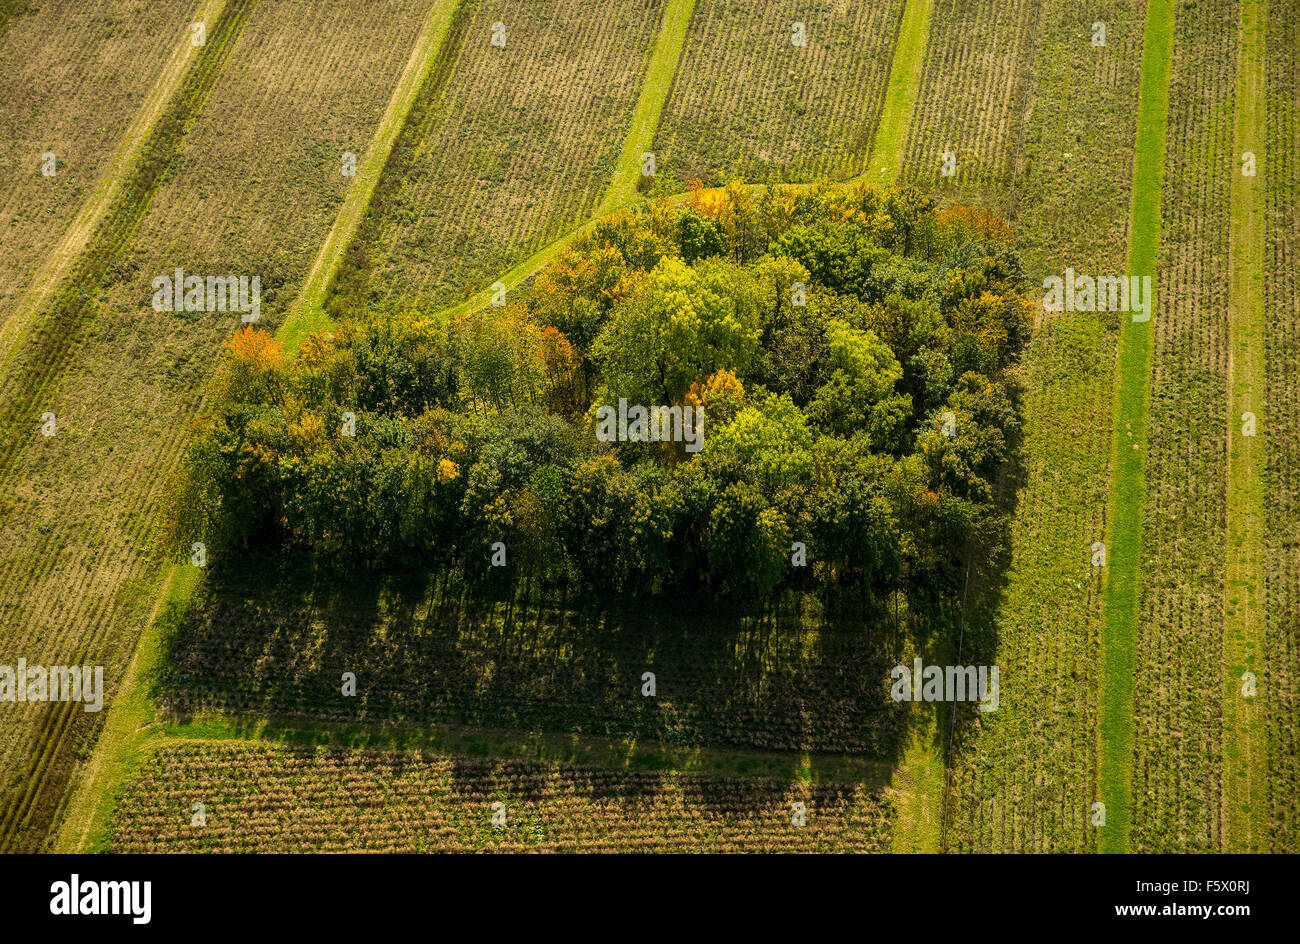 Beech hedge, hedgerow in autumn, Nuttlar, Bestwig, Sauerland, North Rhine-Westphalia, Germany, Nuttlar, Bestwig, Sauerland, Stock Photo